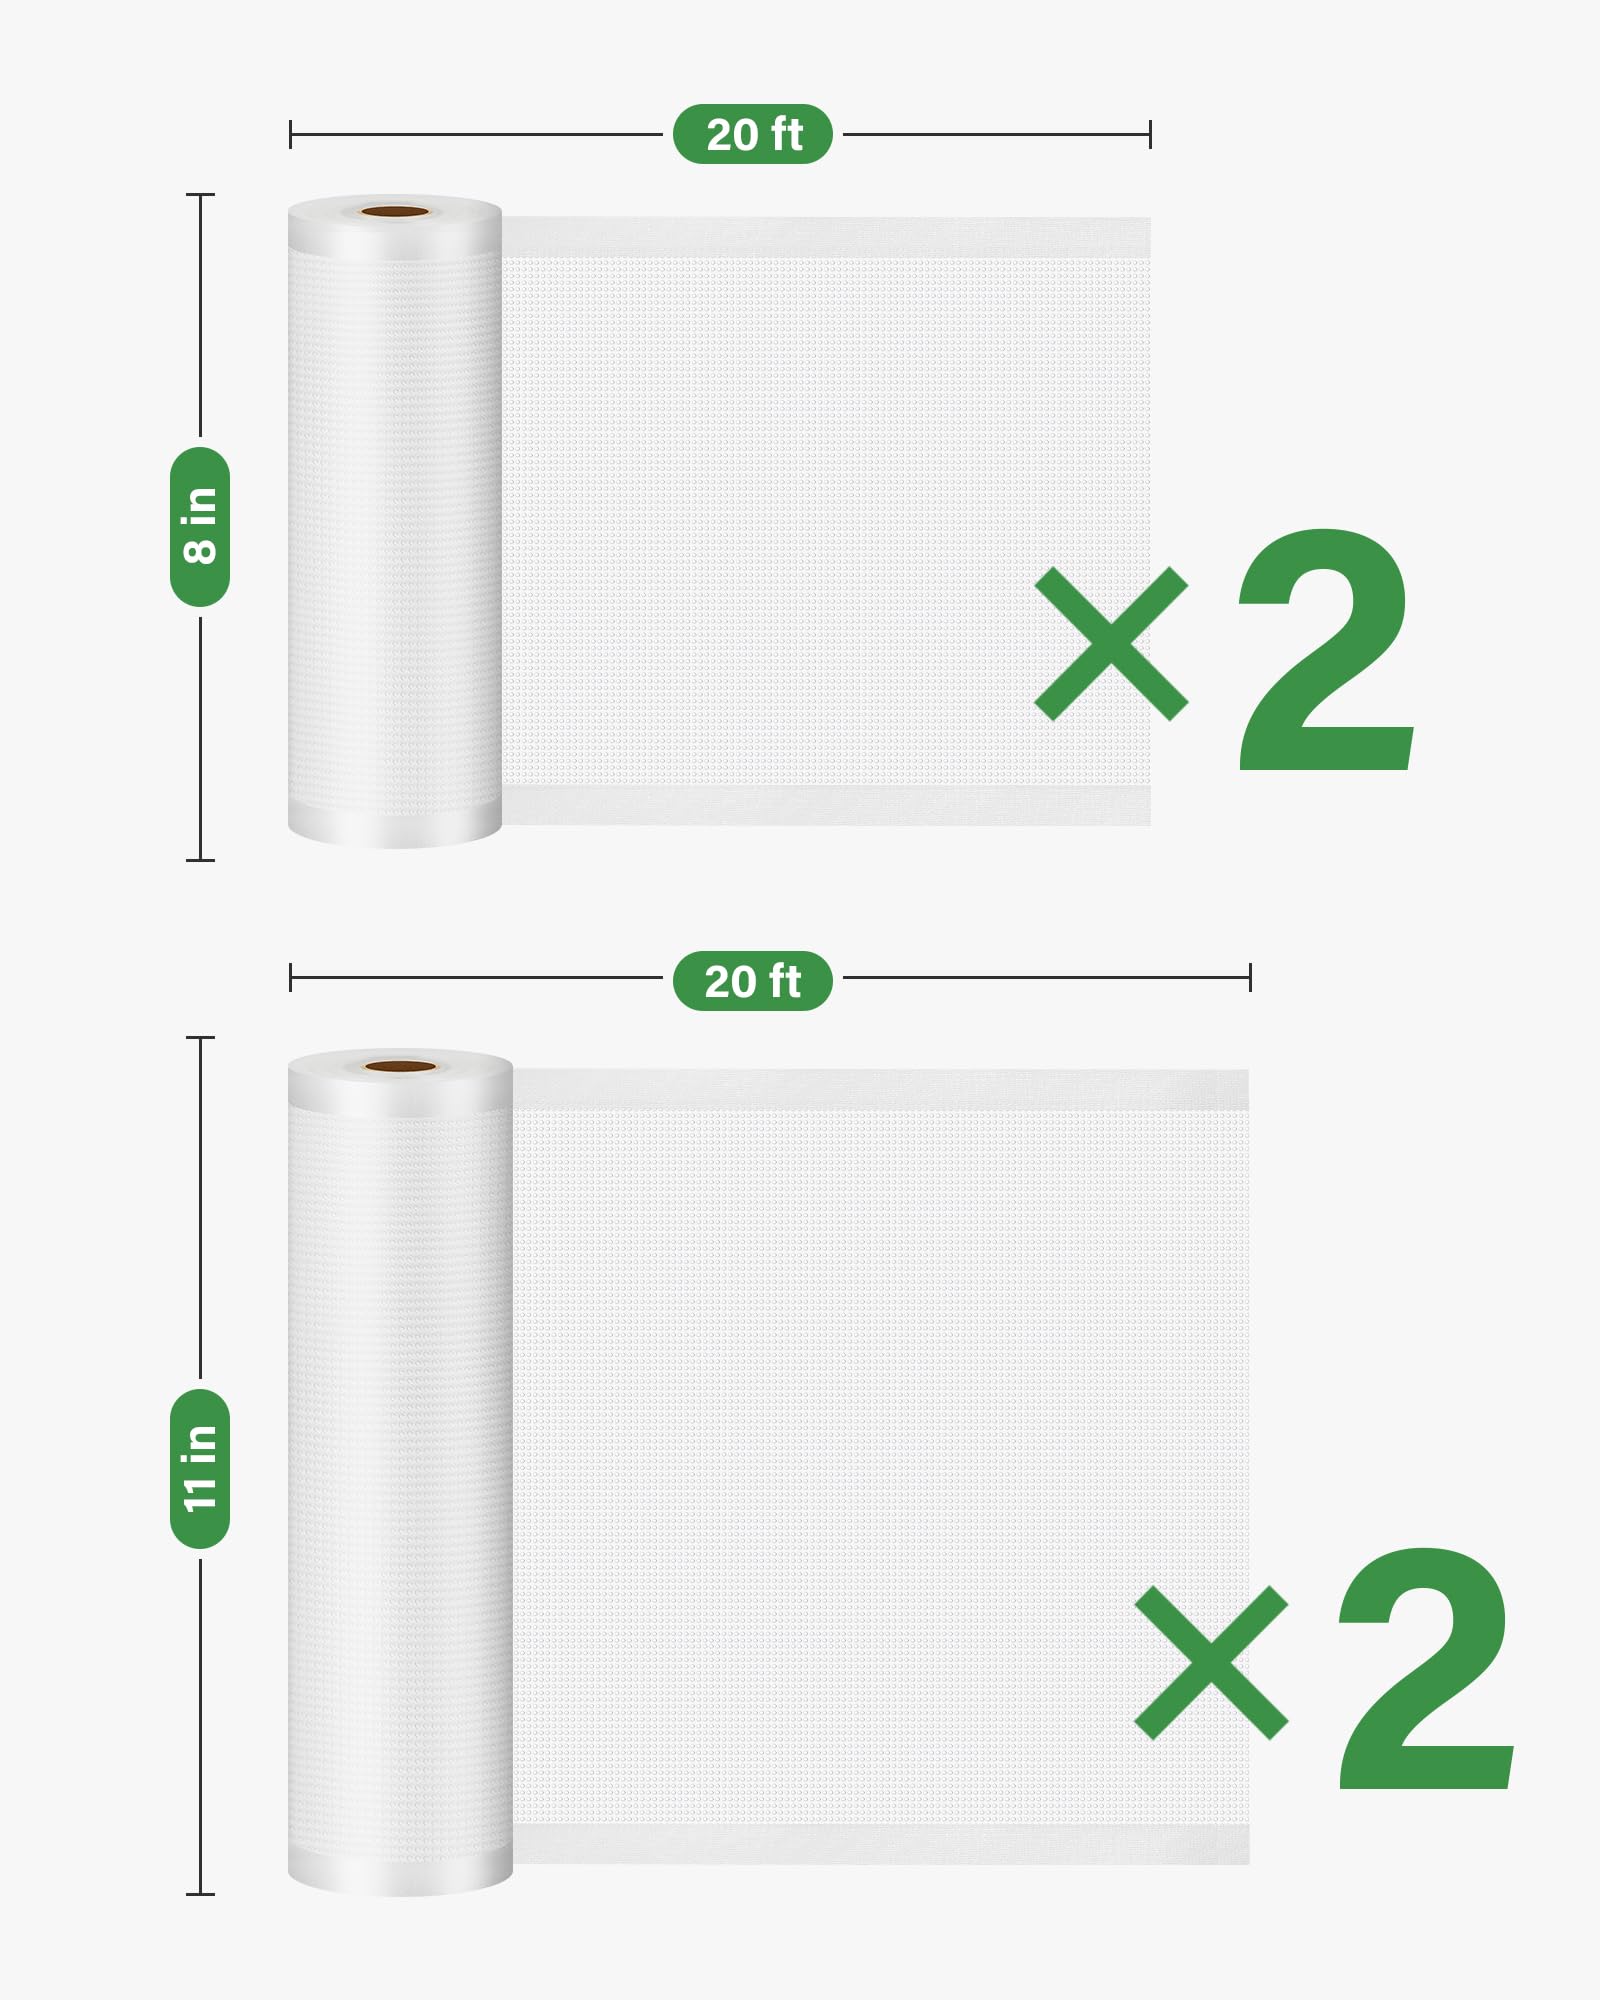 Kootek Vacuum Sealer Bags, 4 Pack 2 Rolls 8"x20' and 2 Rolls 11"x20' (Total 80 feet), Commercial Grade, BPA Free Food Vac Bags Rolls for Storage, Meal Prep or Sous Vide